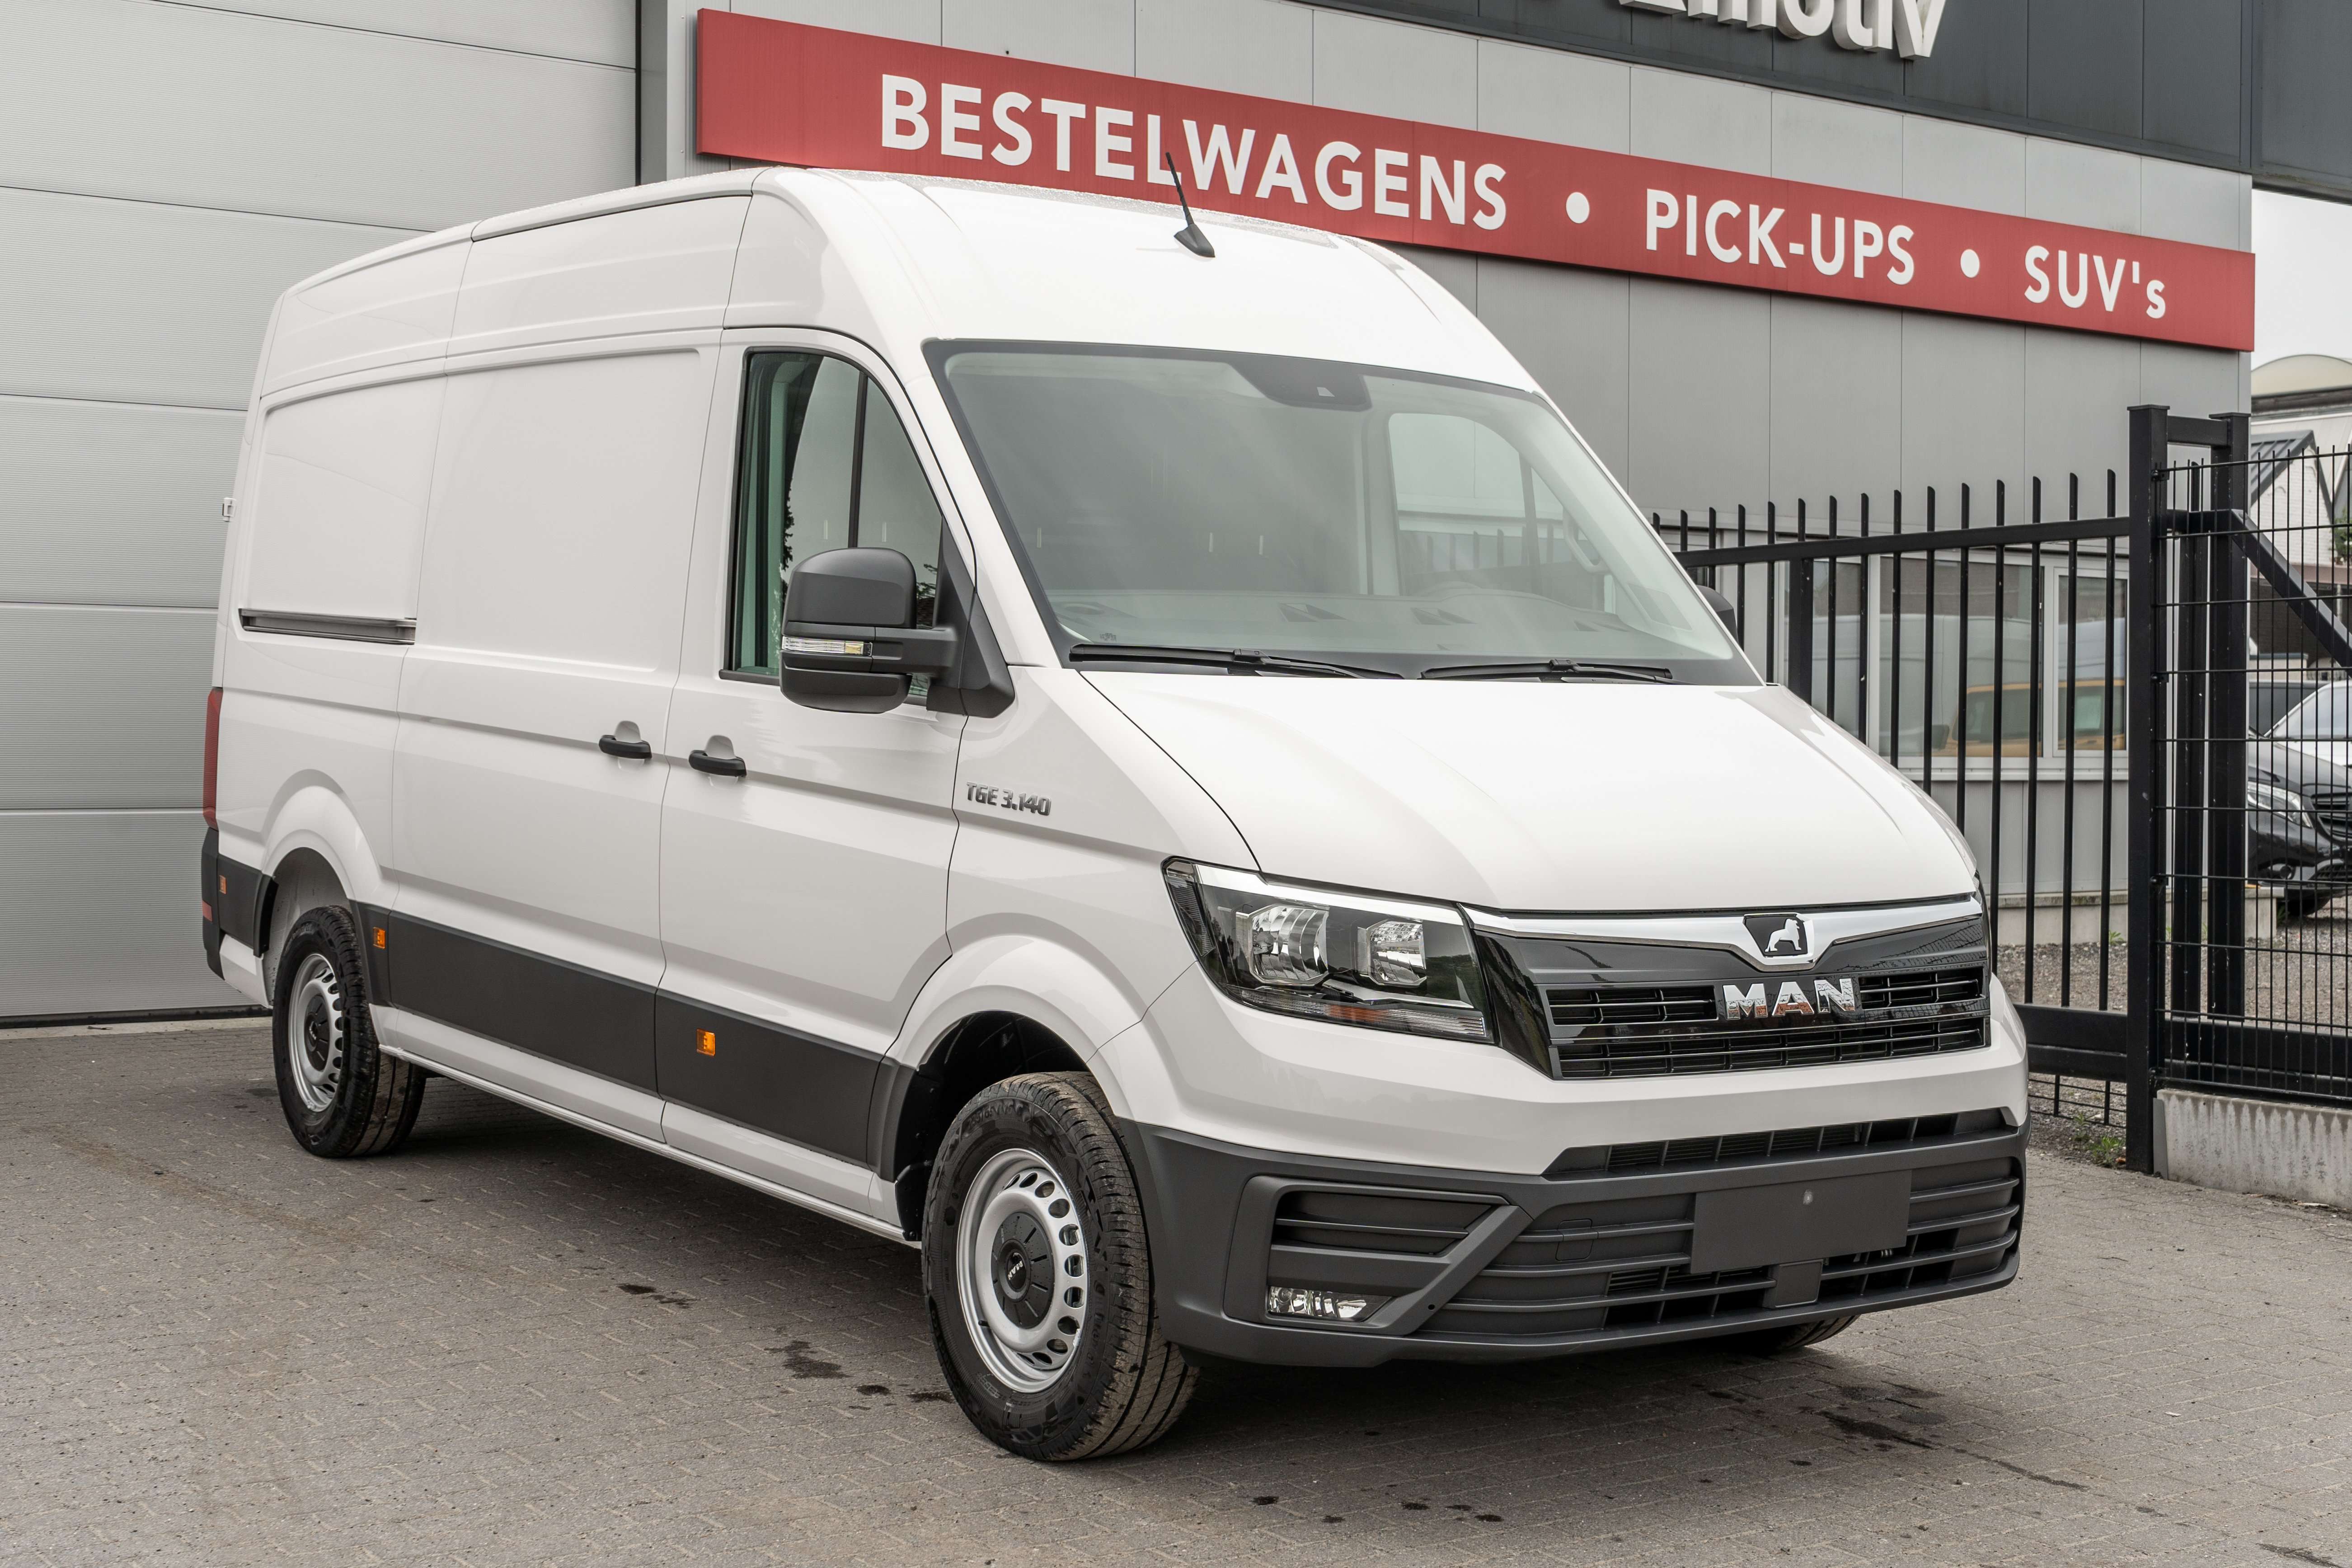 MAN TGE Transporter in White pre-registered in Boortmeerbeek for € 56,870.-